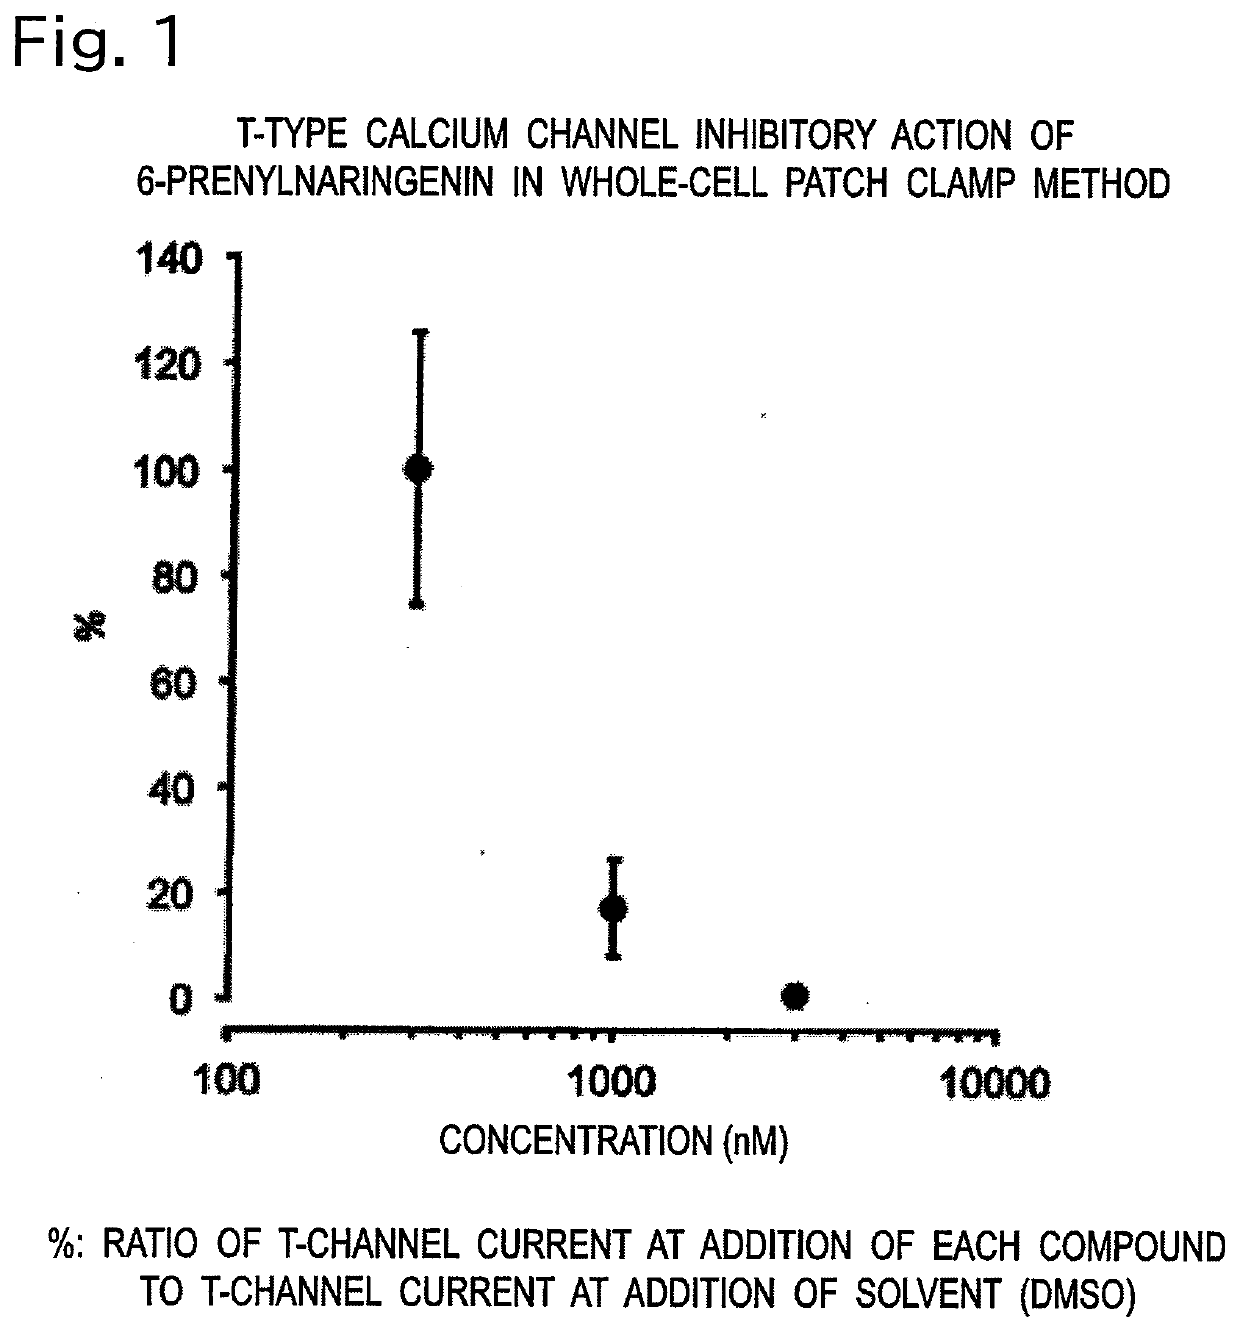 T-type calcium channel inhibitor